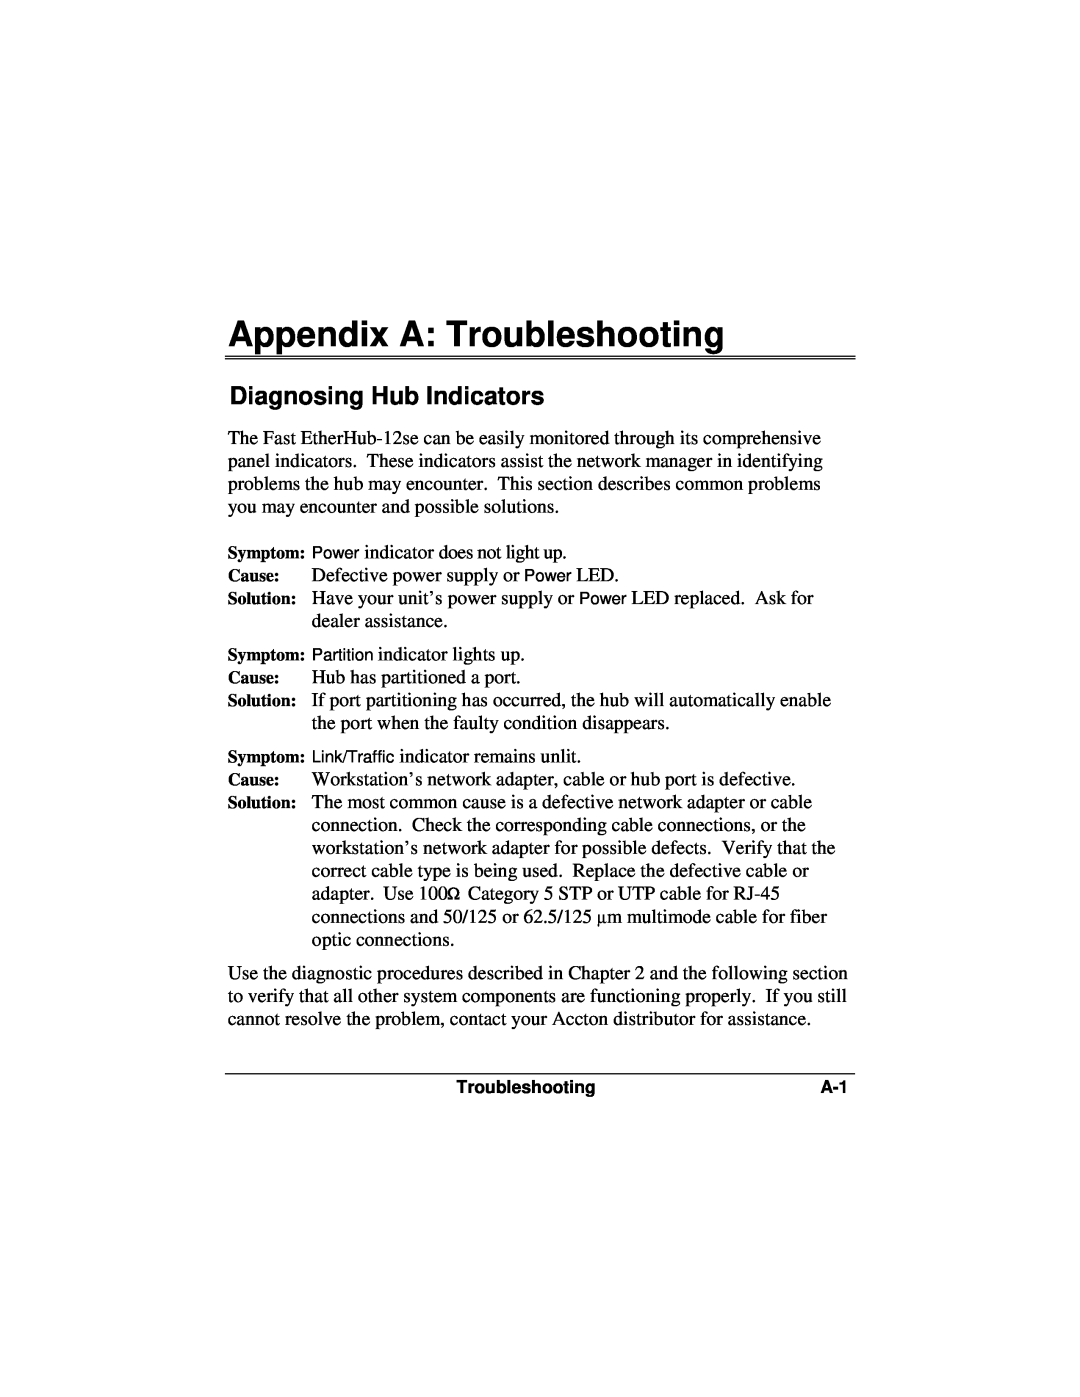 Accton Technology 12se manual Appendix A Troubleshooting, Diagnosing Hub Indicators 